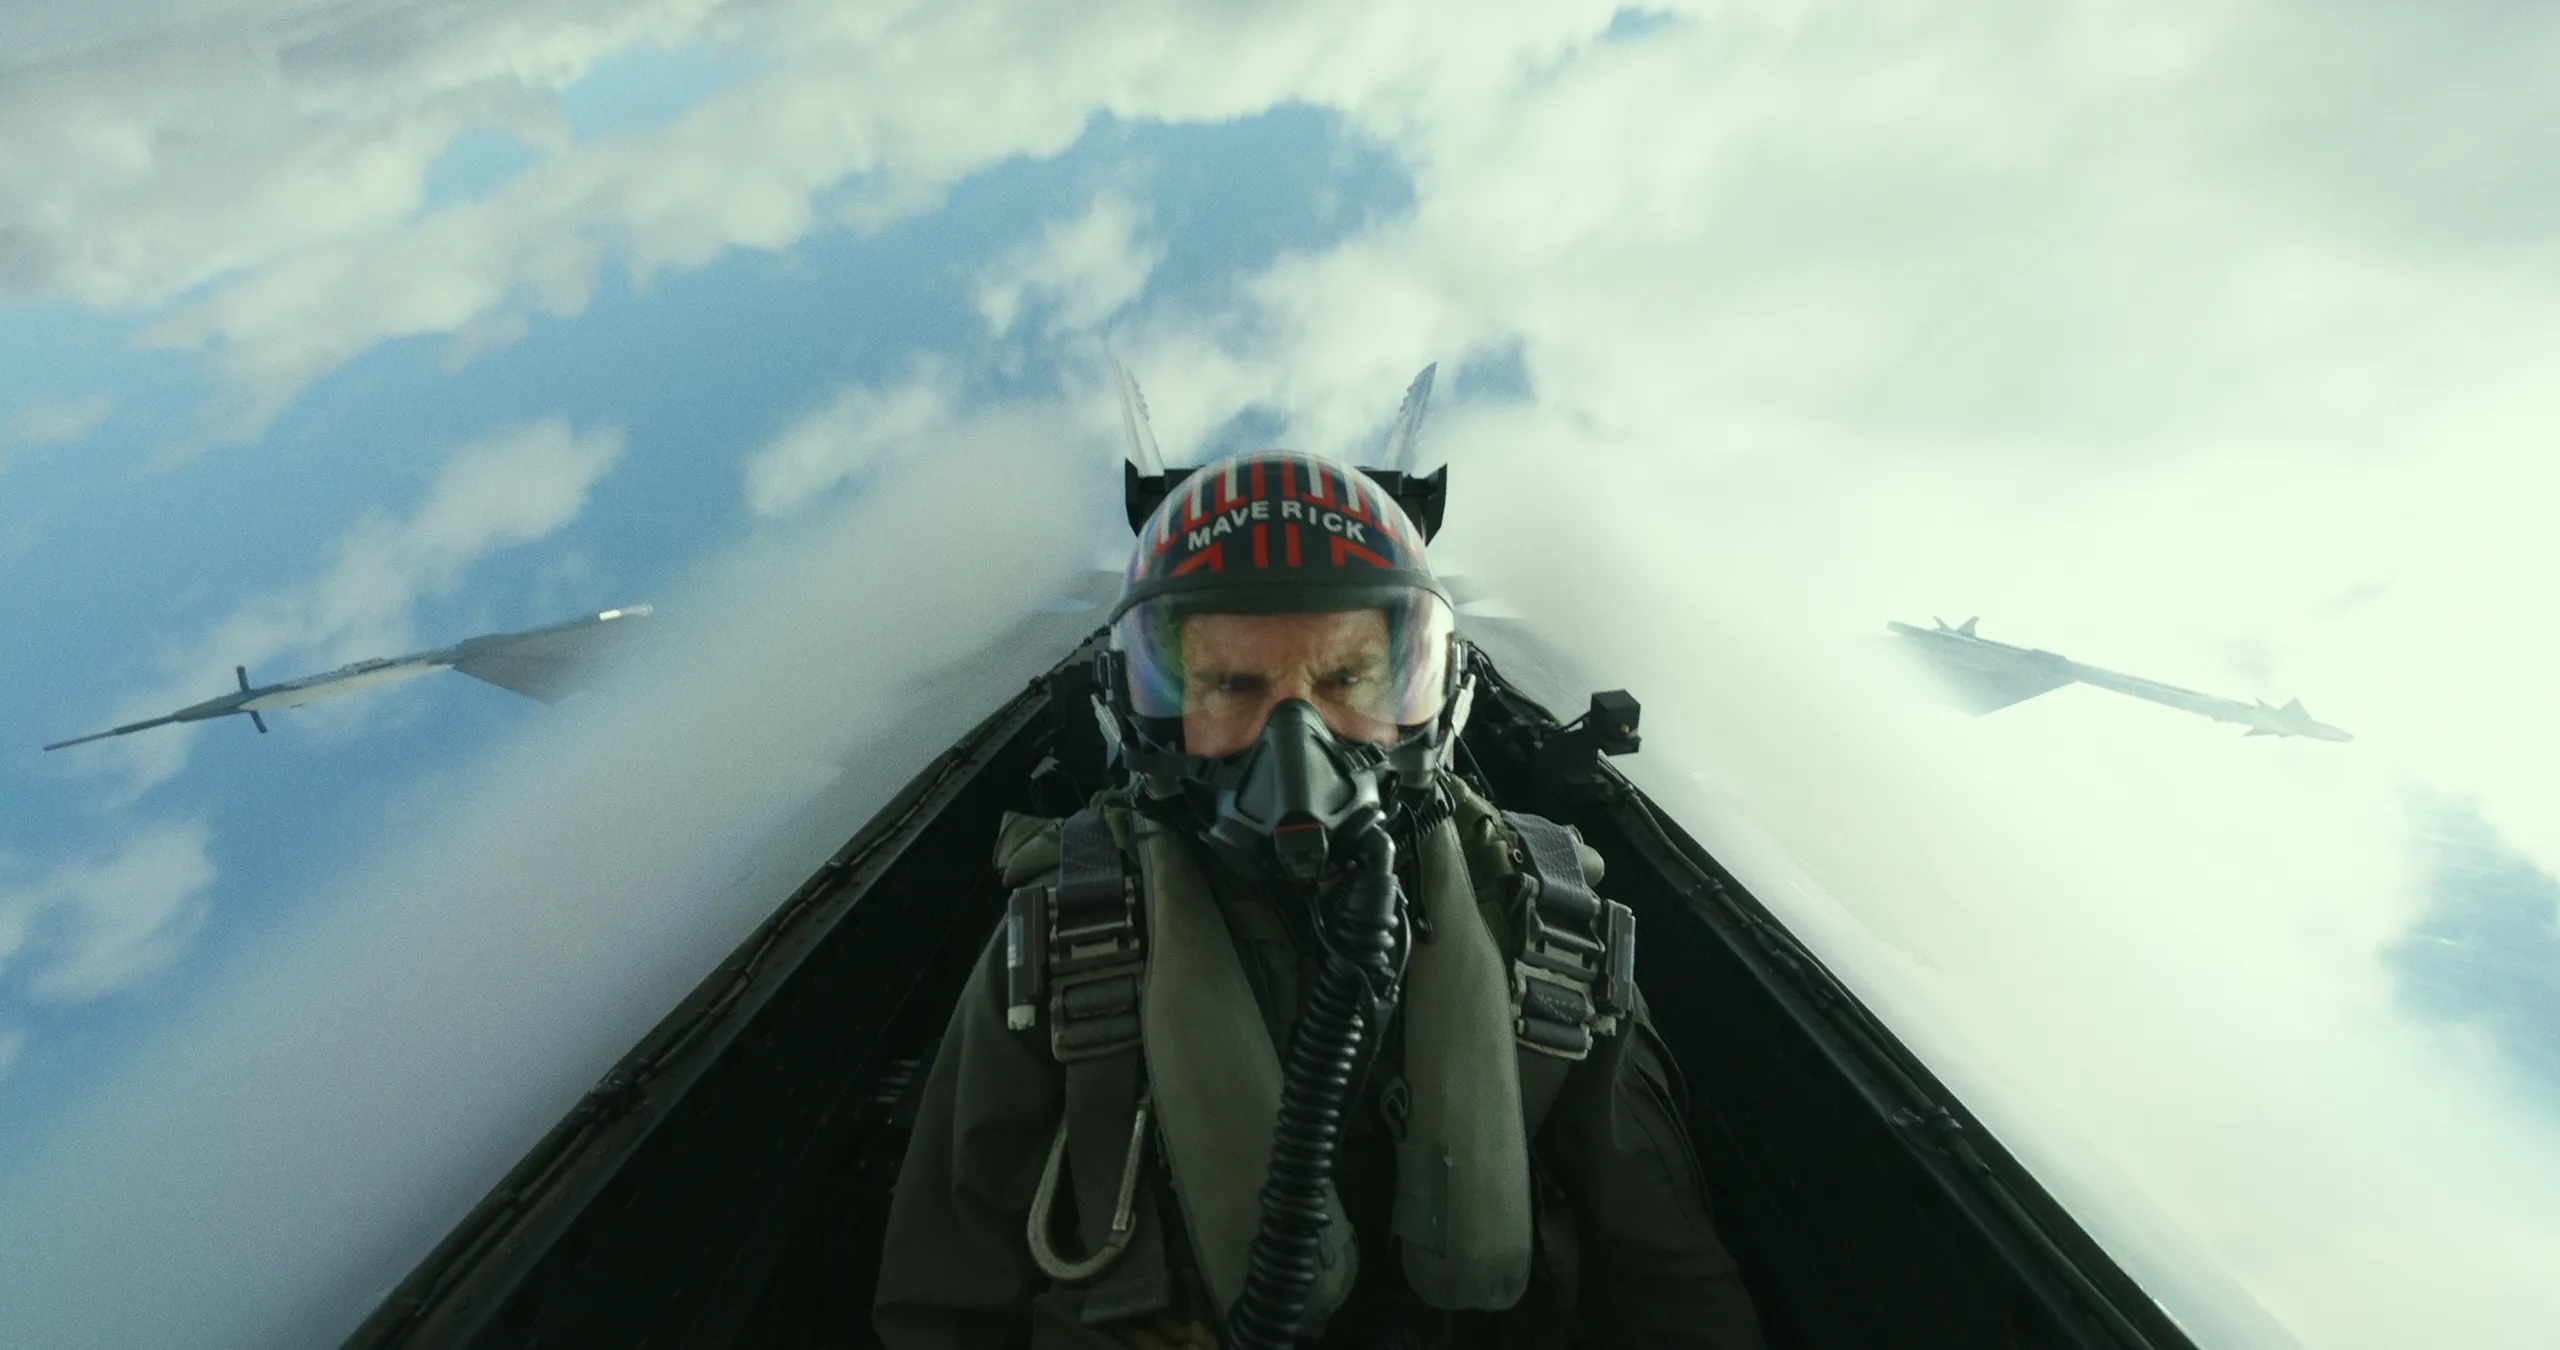 Will 'Top Gun: Maverick' Boost Navy Recruiting? History Says